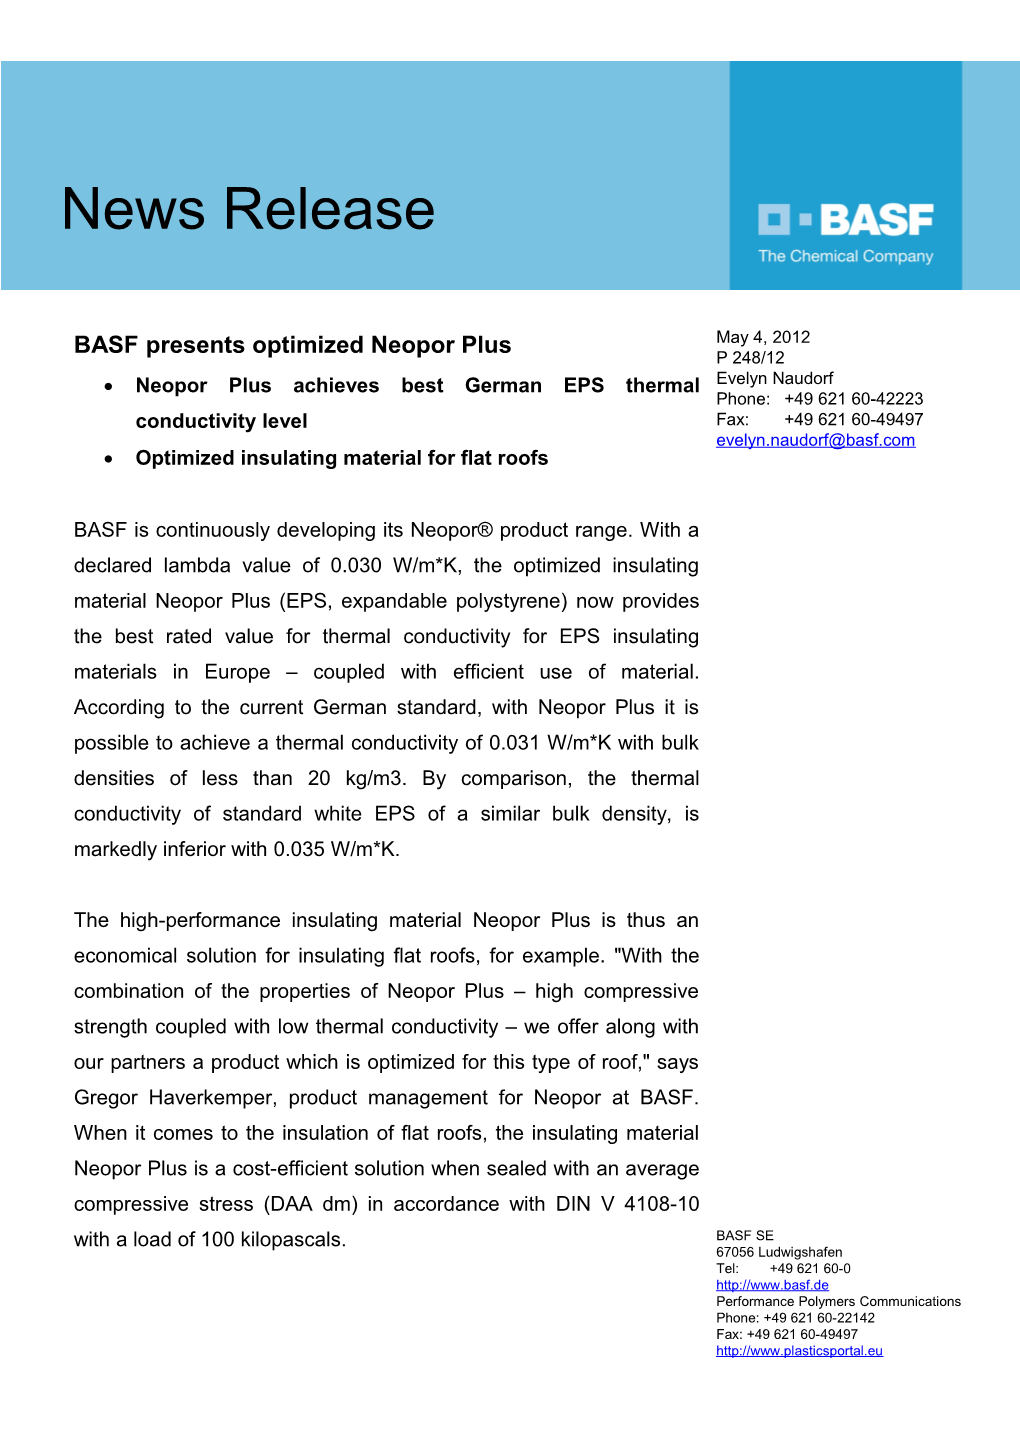 BASF Presents Optimized Neopor Plus